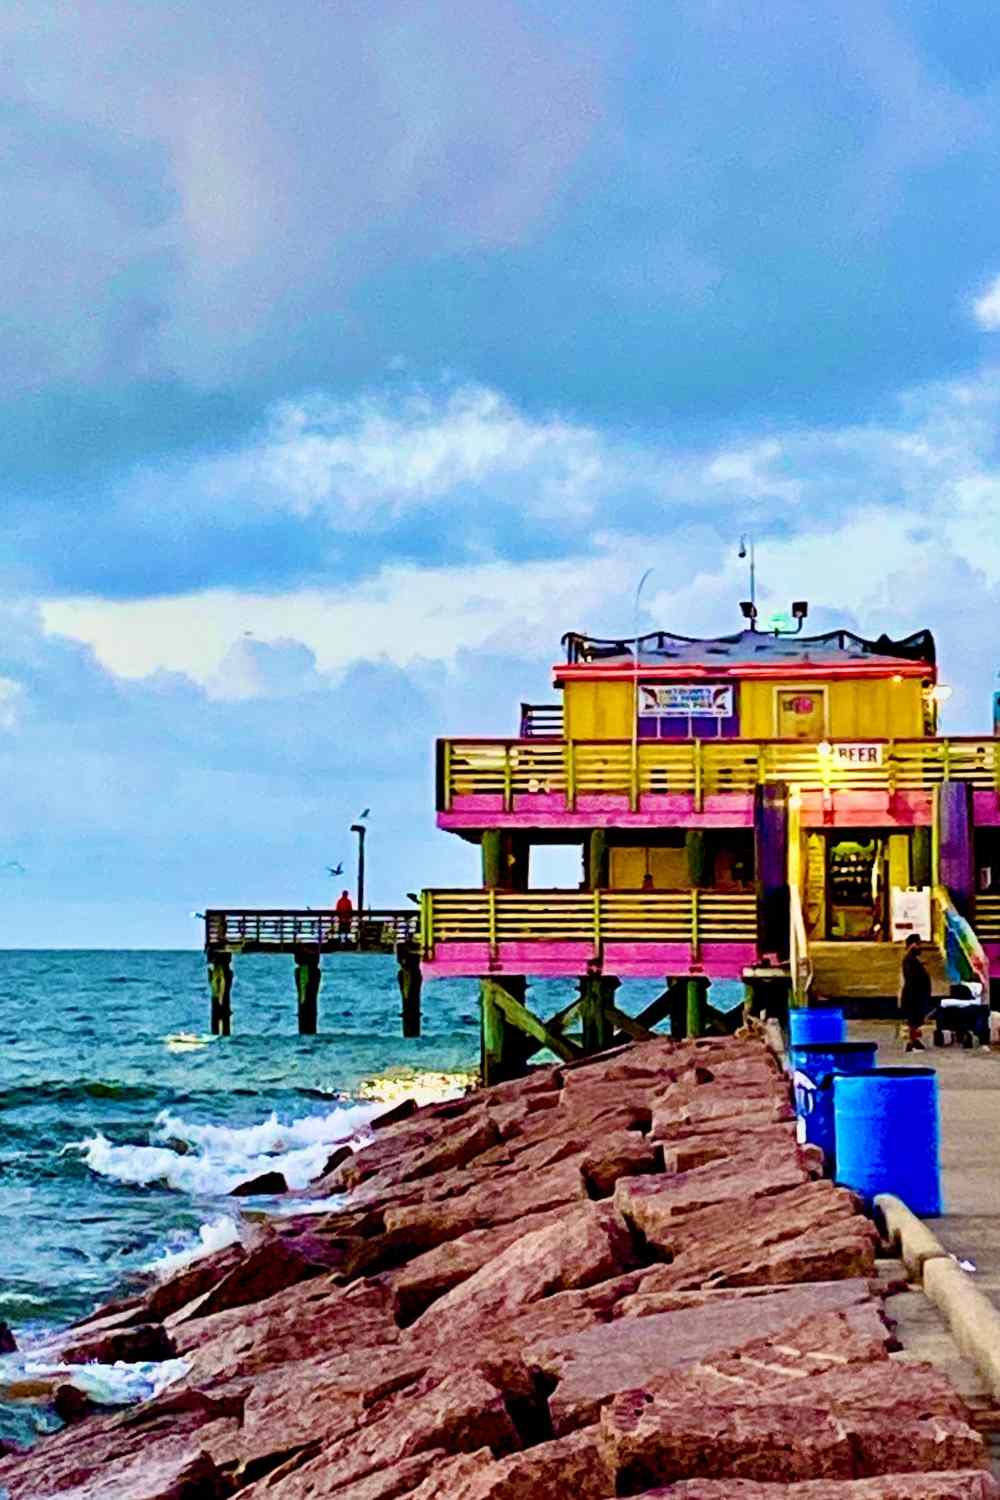 Galveston’s Beaches and Strand Historic District